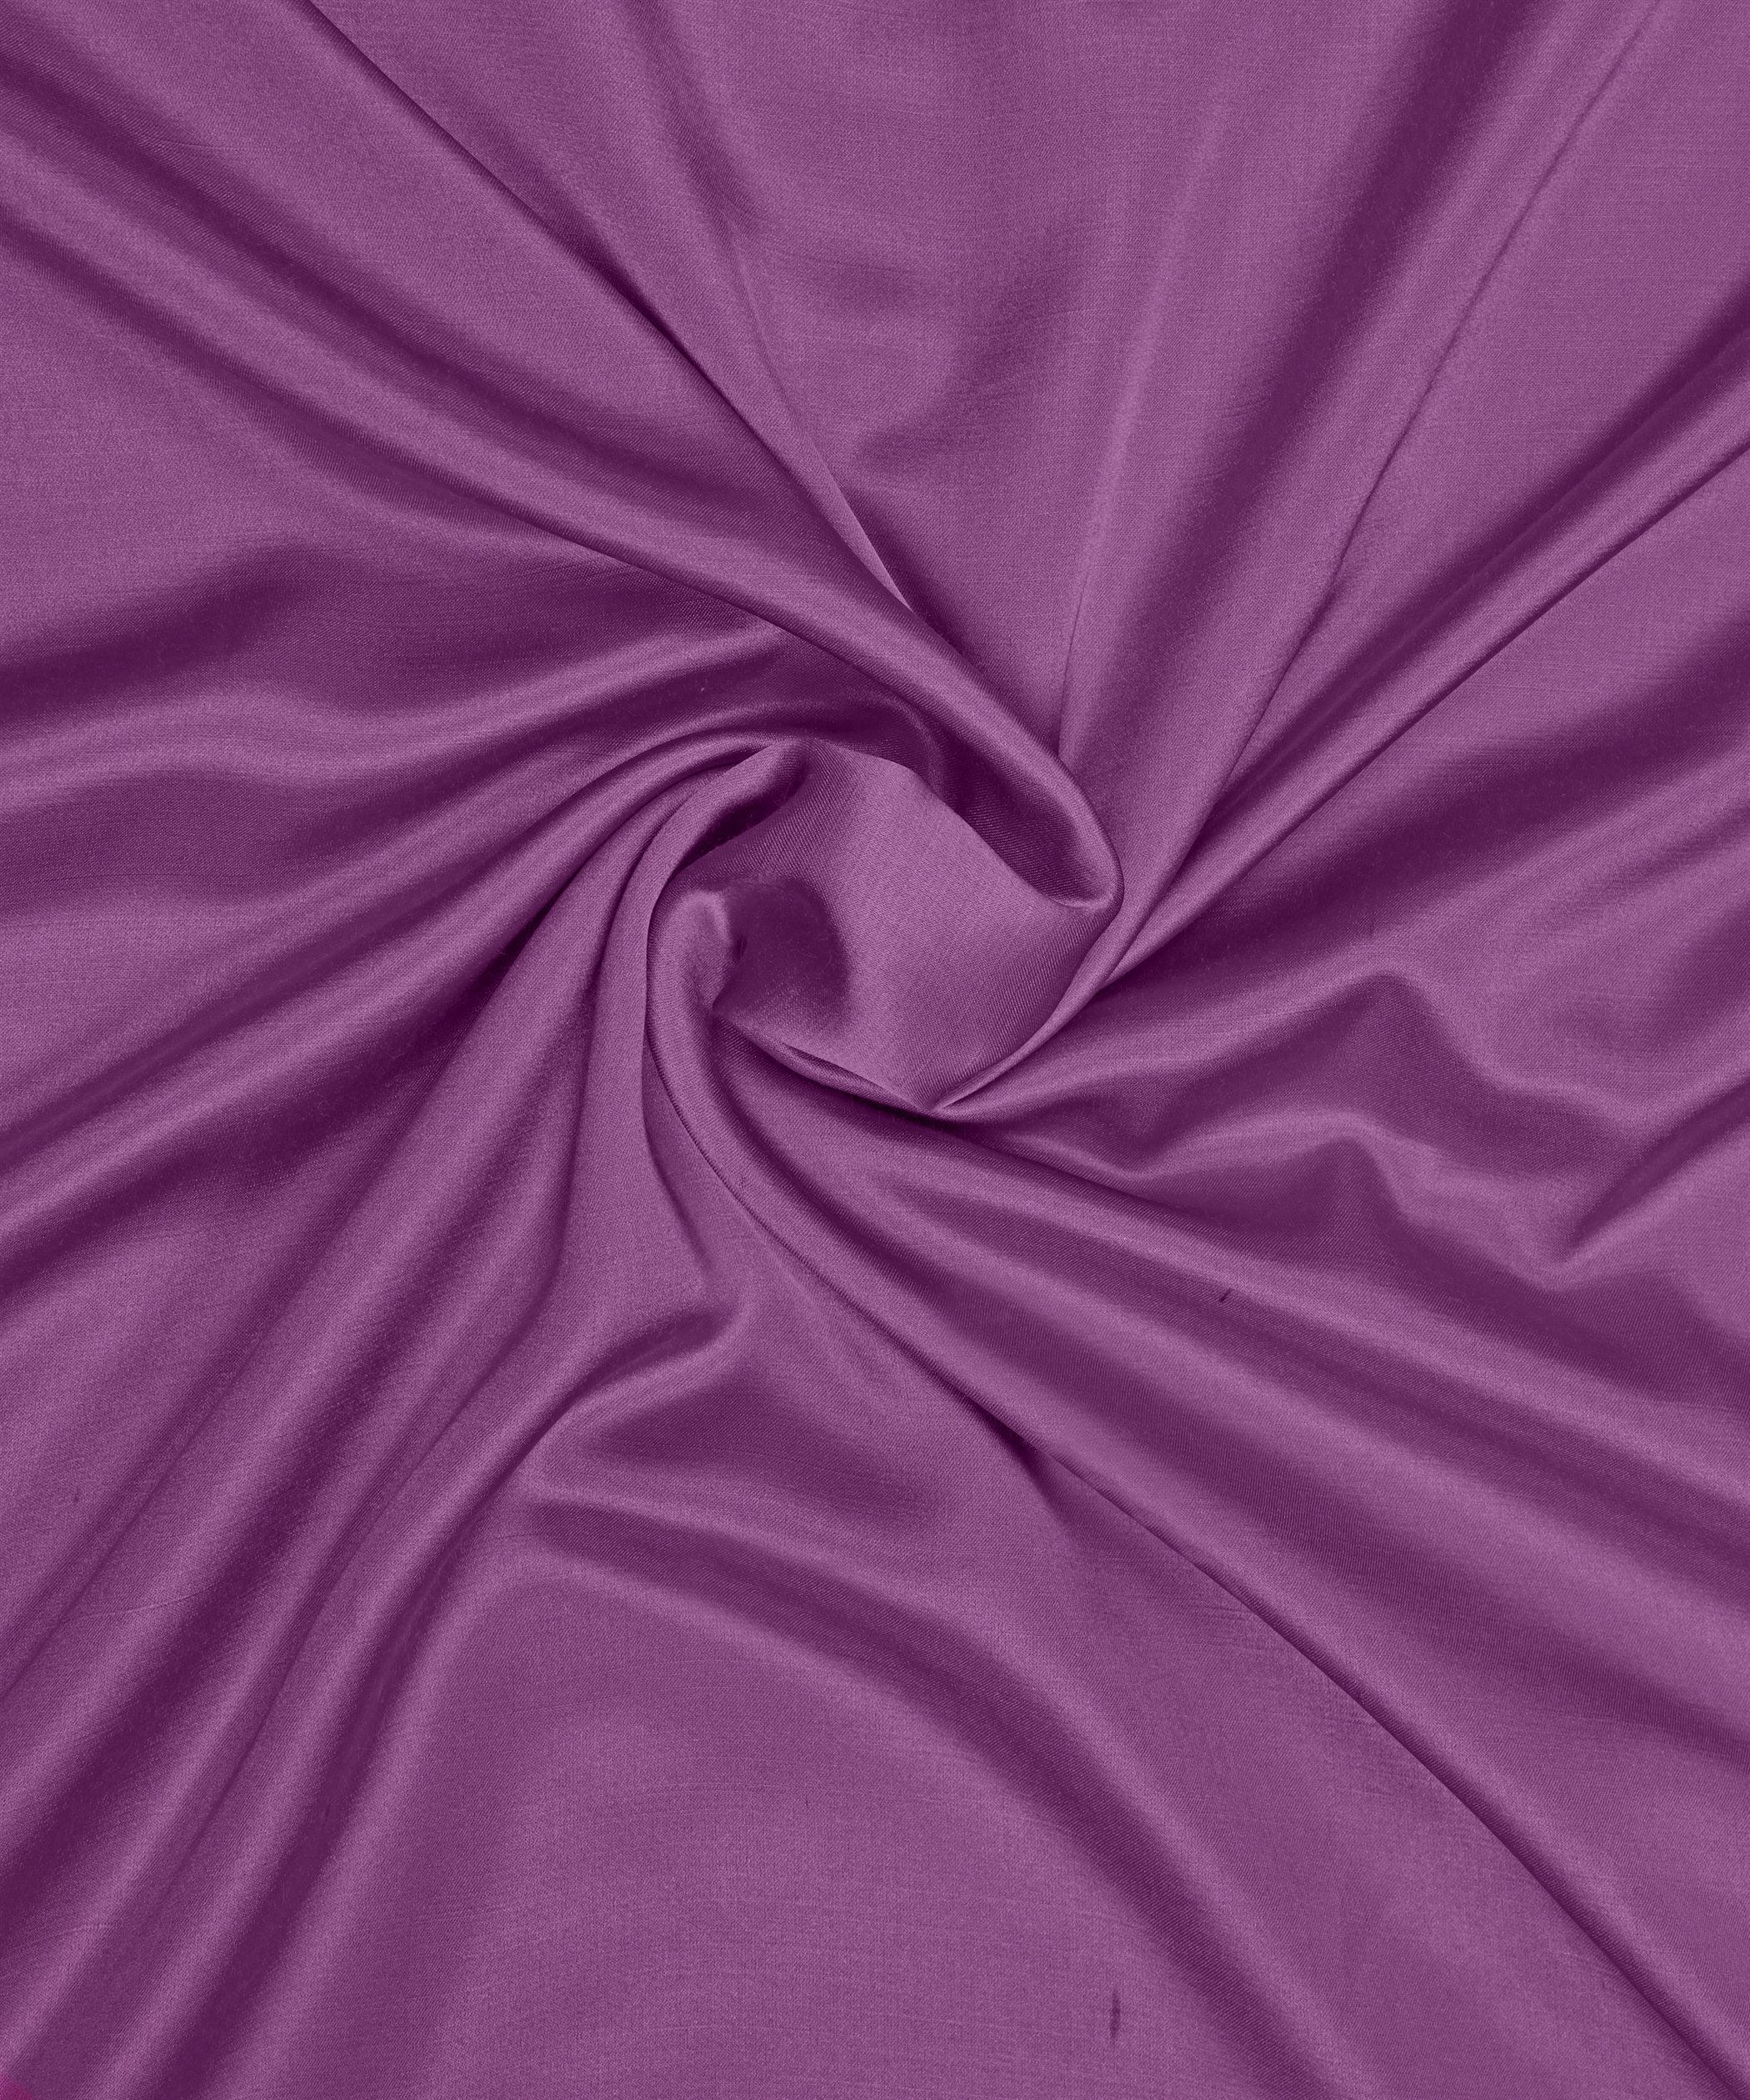 Dim Purple Plain Dyed Modal Satin Fabric